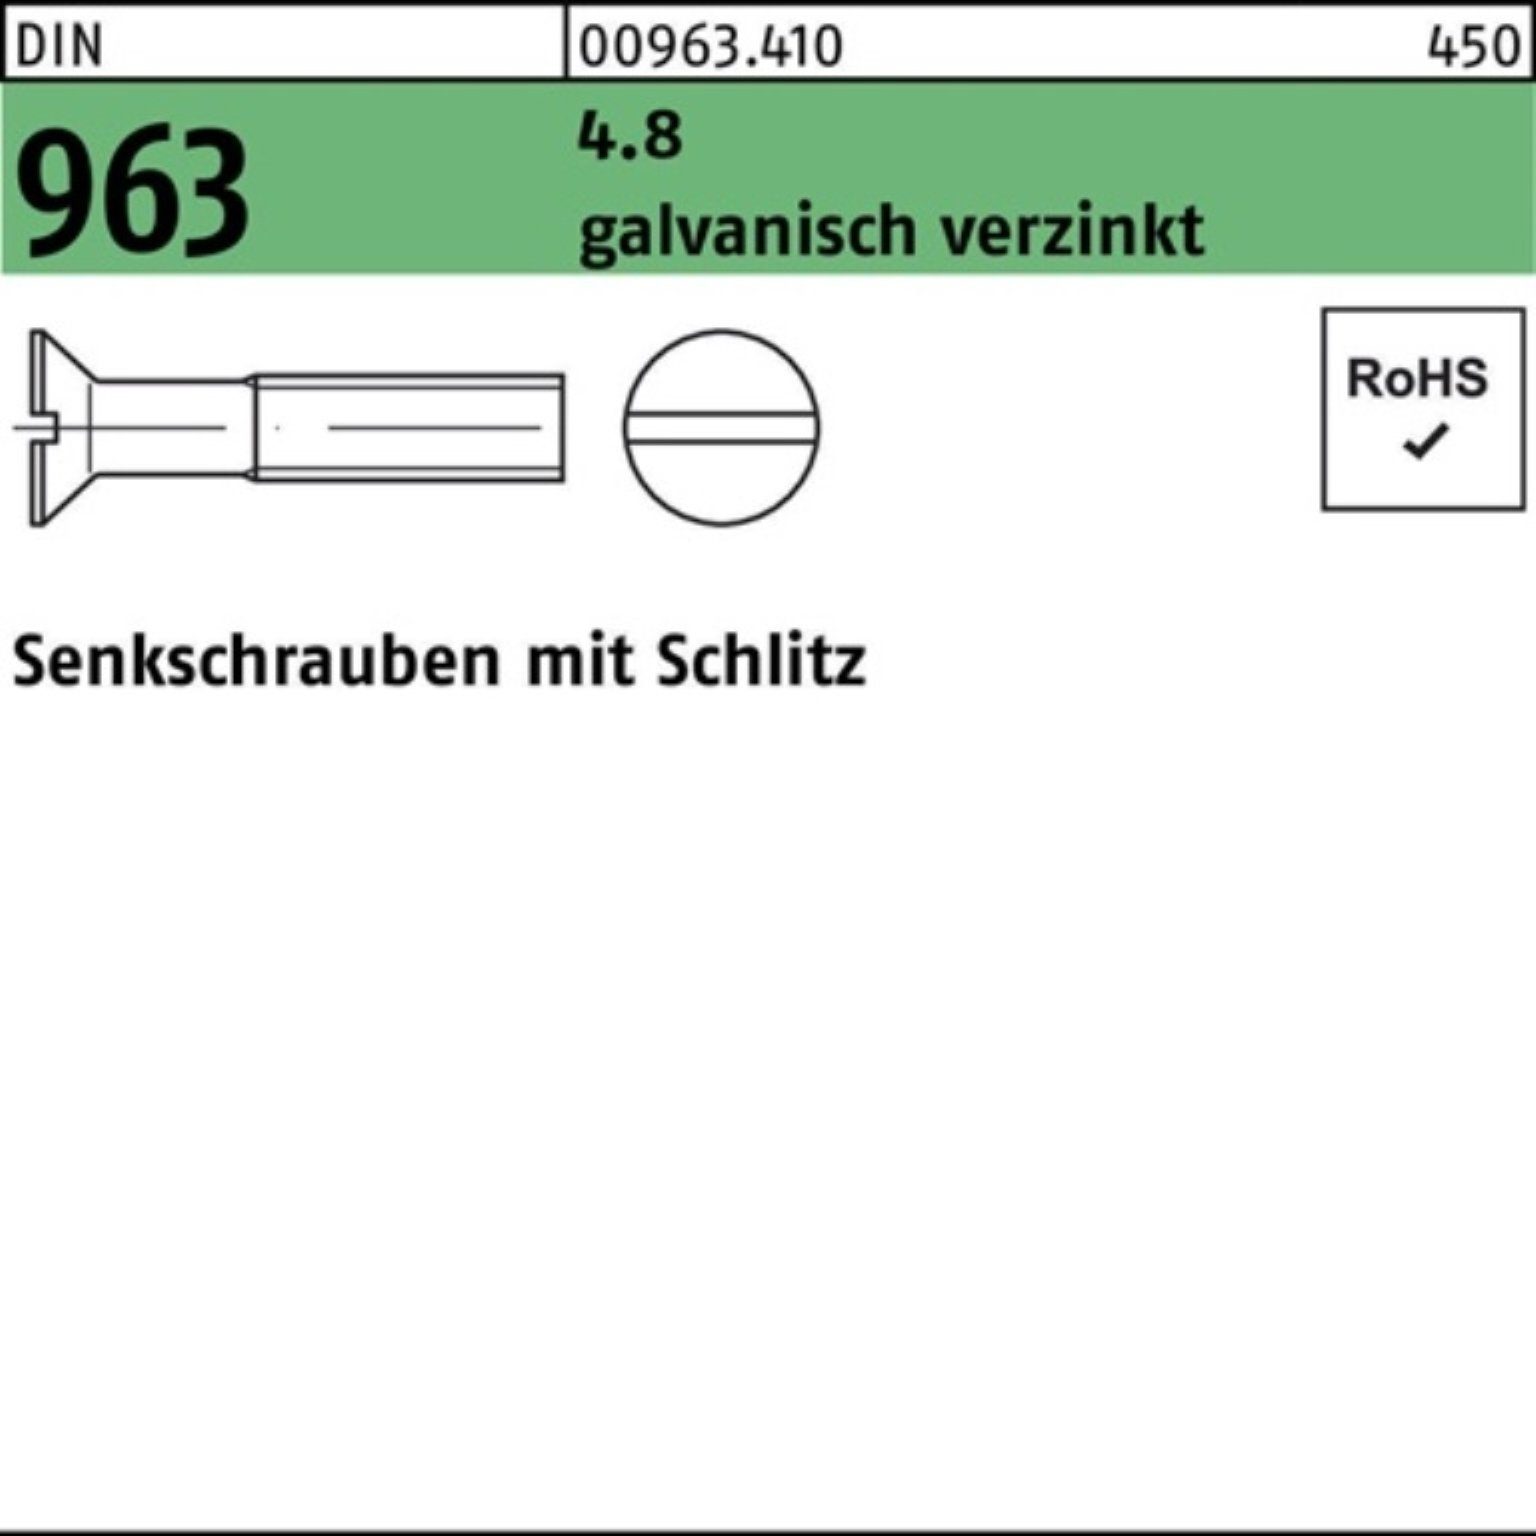 M5x Senkschraube Reyher 25 Pack DIN Schlitz Senkschraube Stü 200 galv.verz. 4.8 963 200er